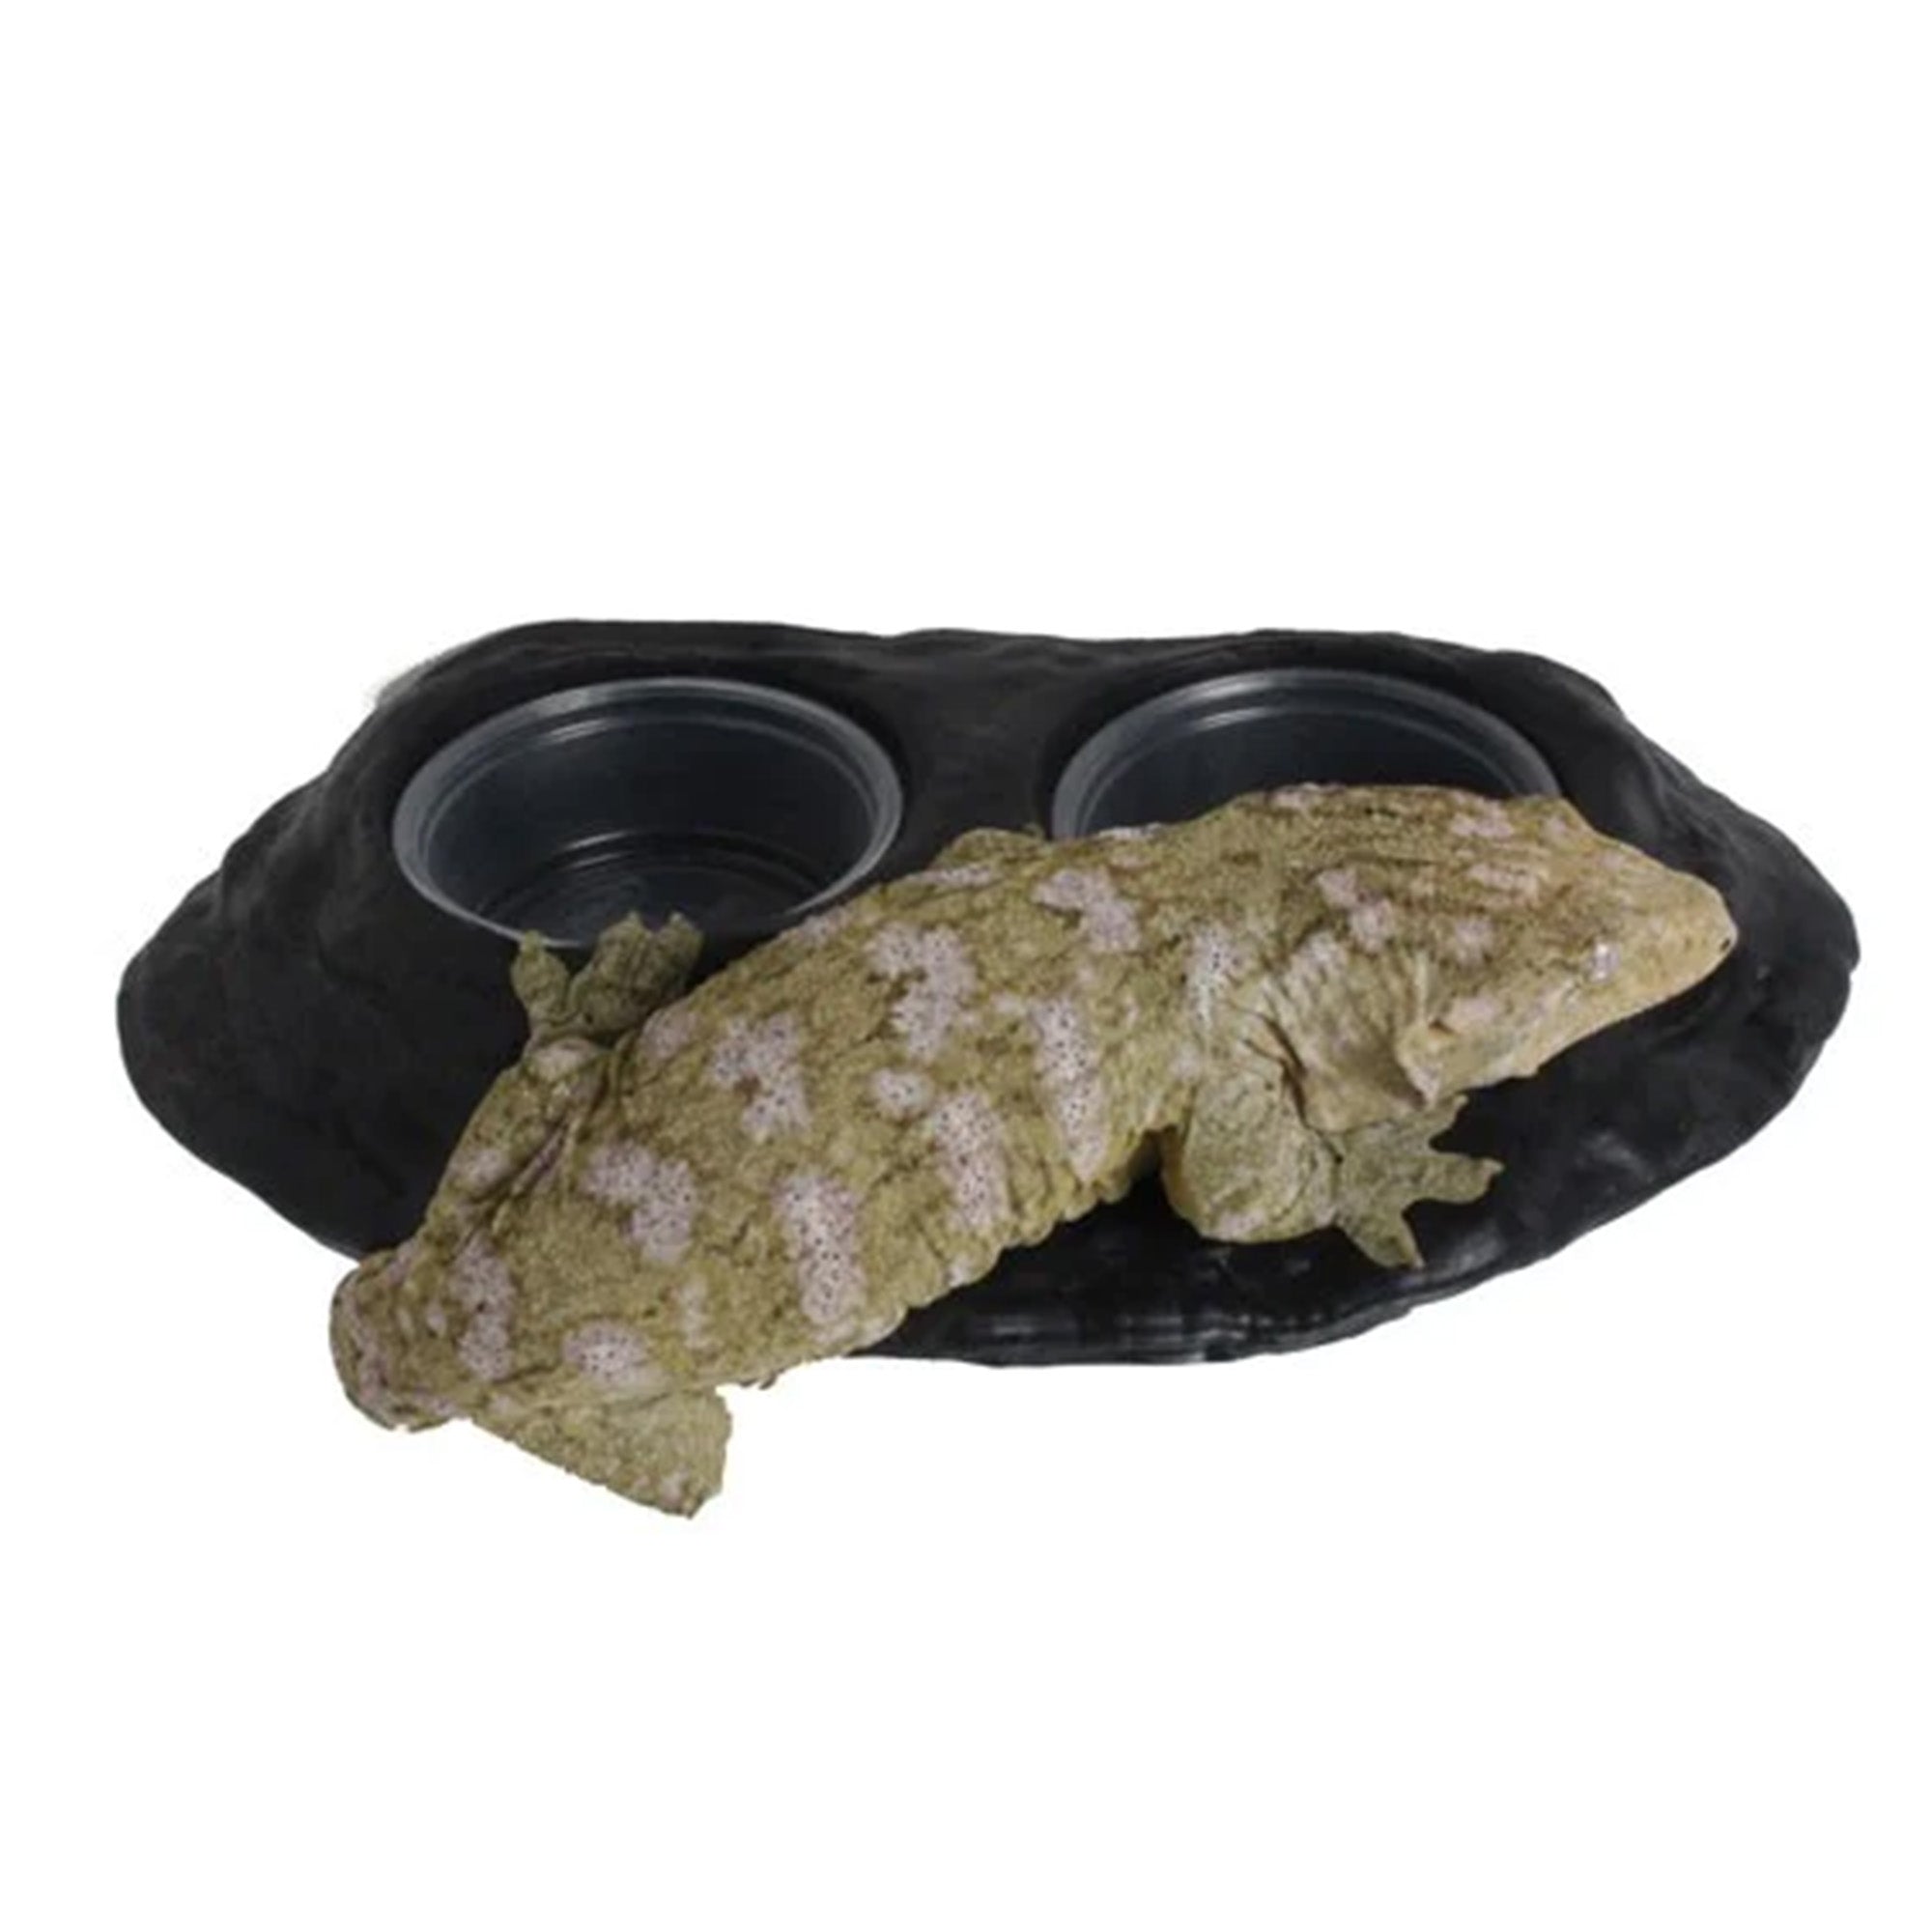 REPTI ZOO Magnetic Gecko Ledge Feeder- Mangeoire pour gecko aimantée